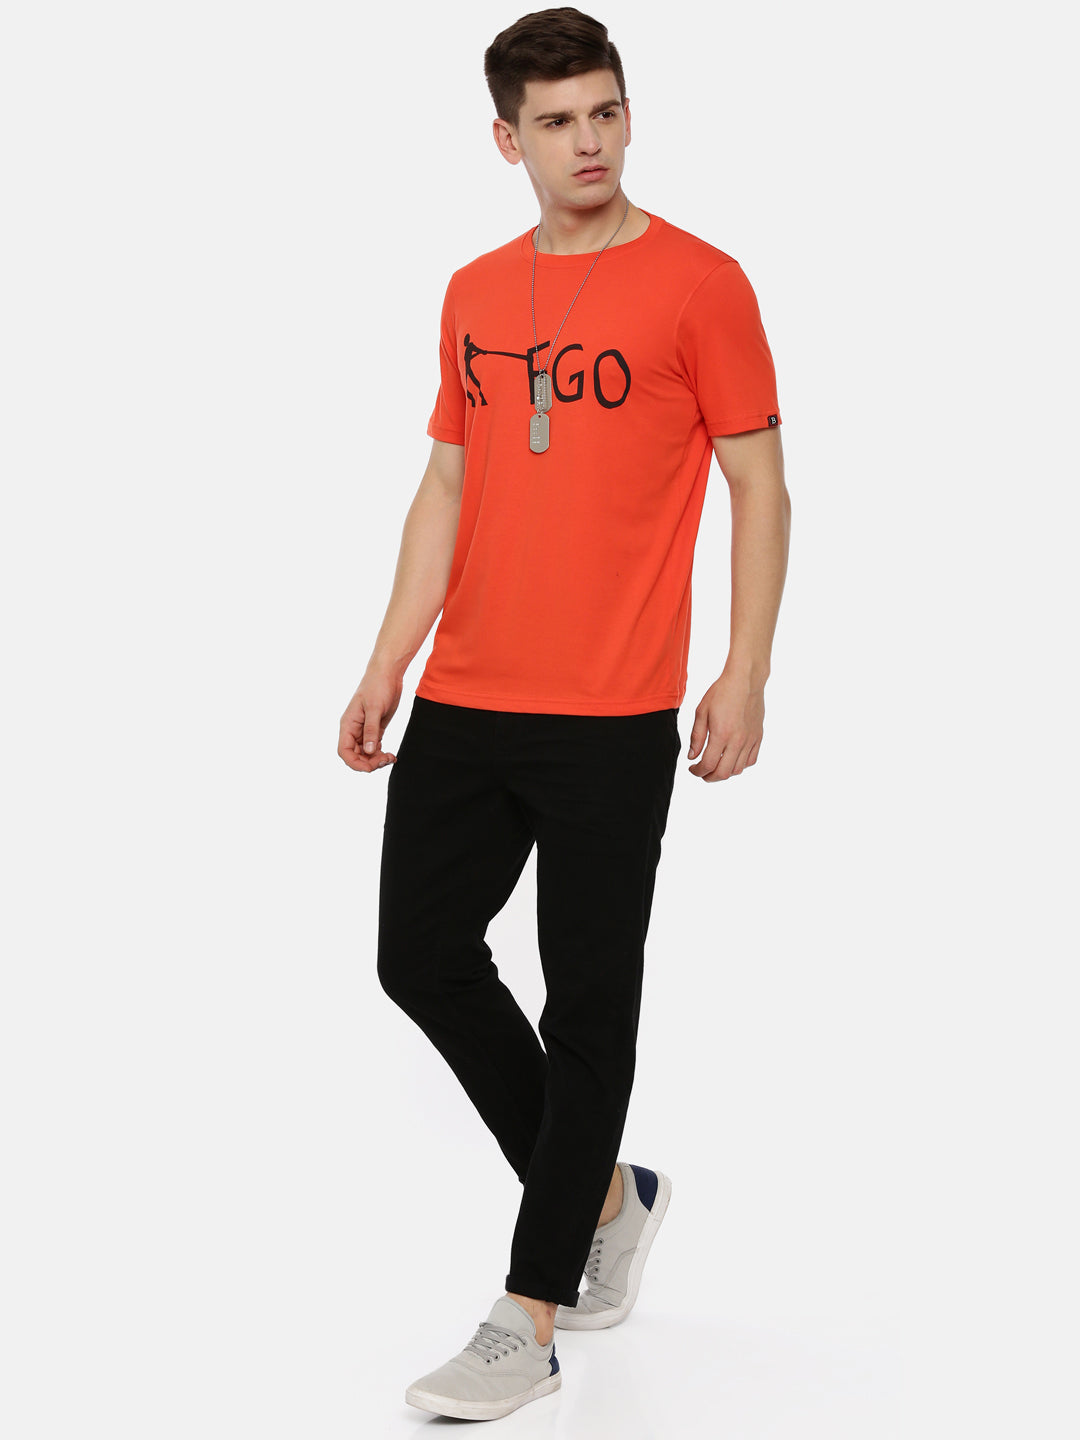 Ego T-Shirt Graphic T-Shirts Bushirt   